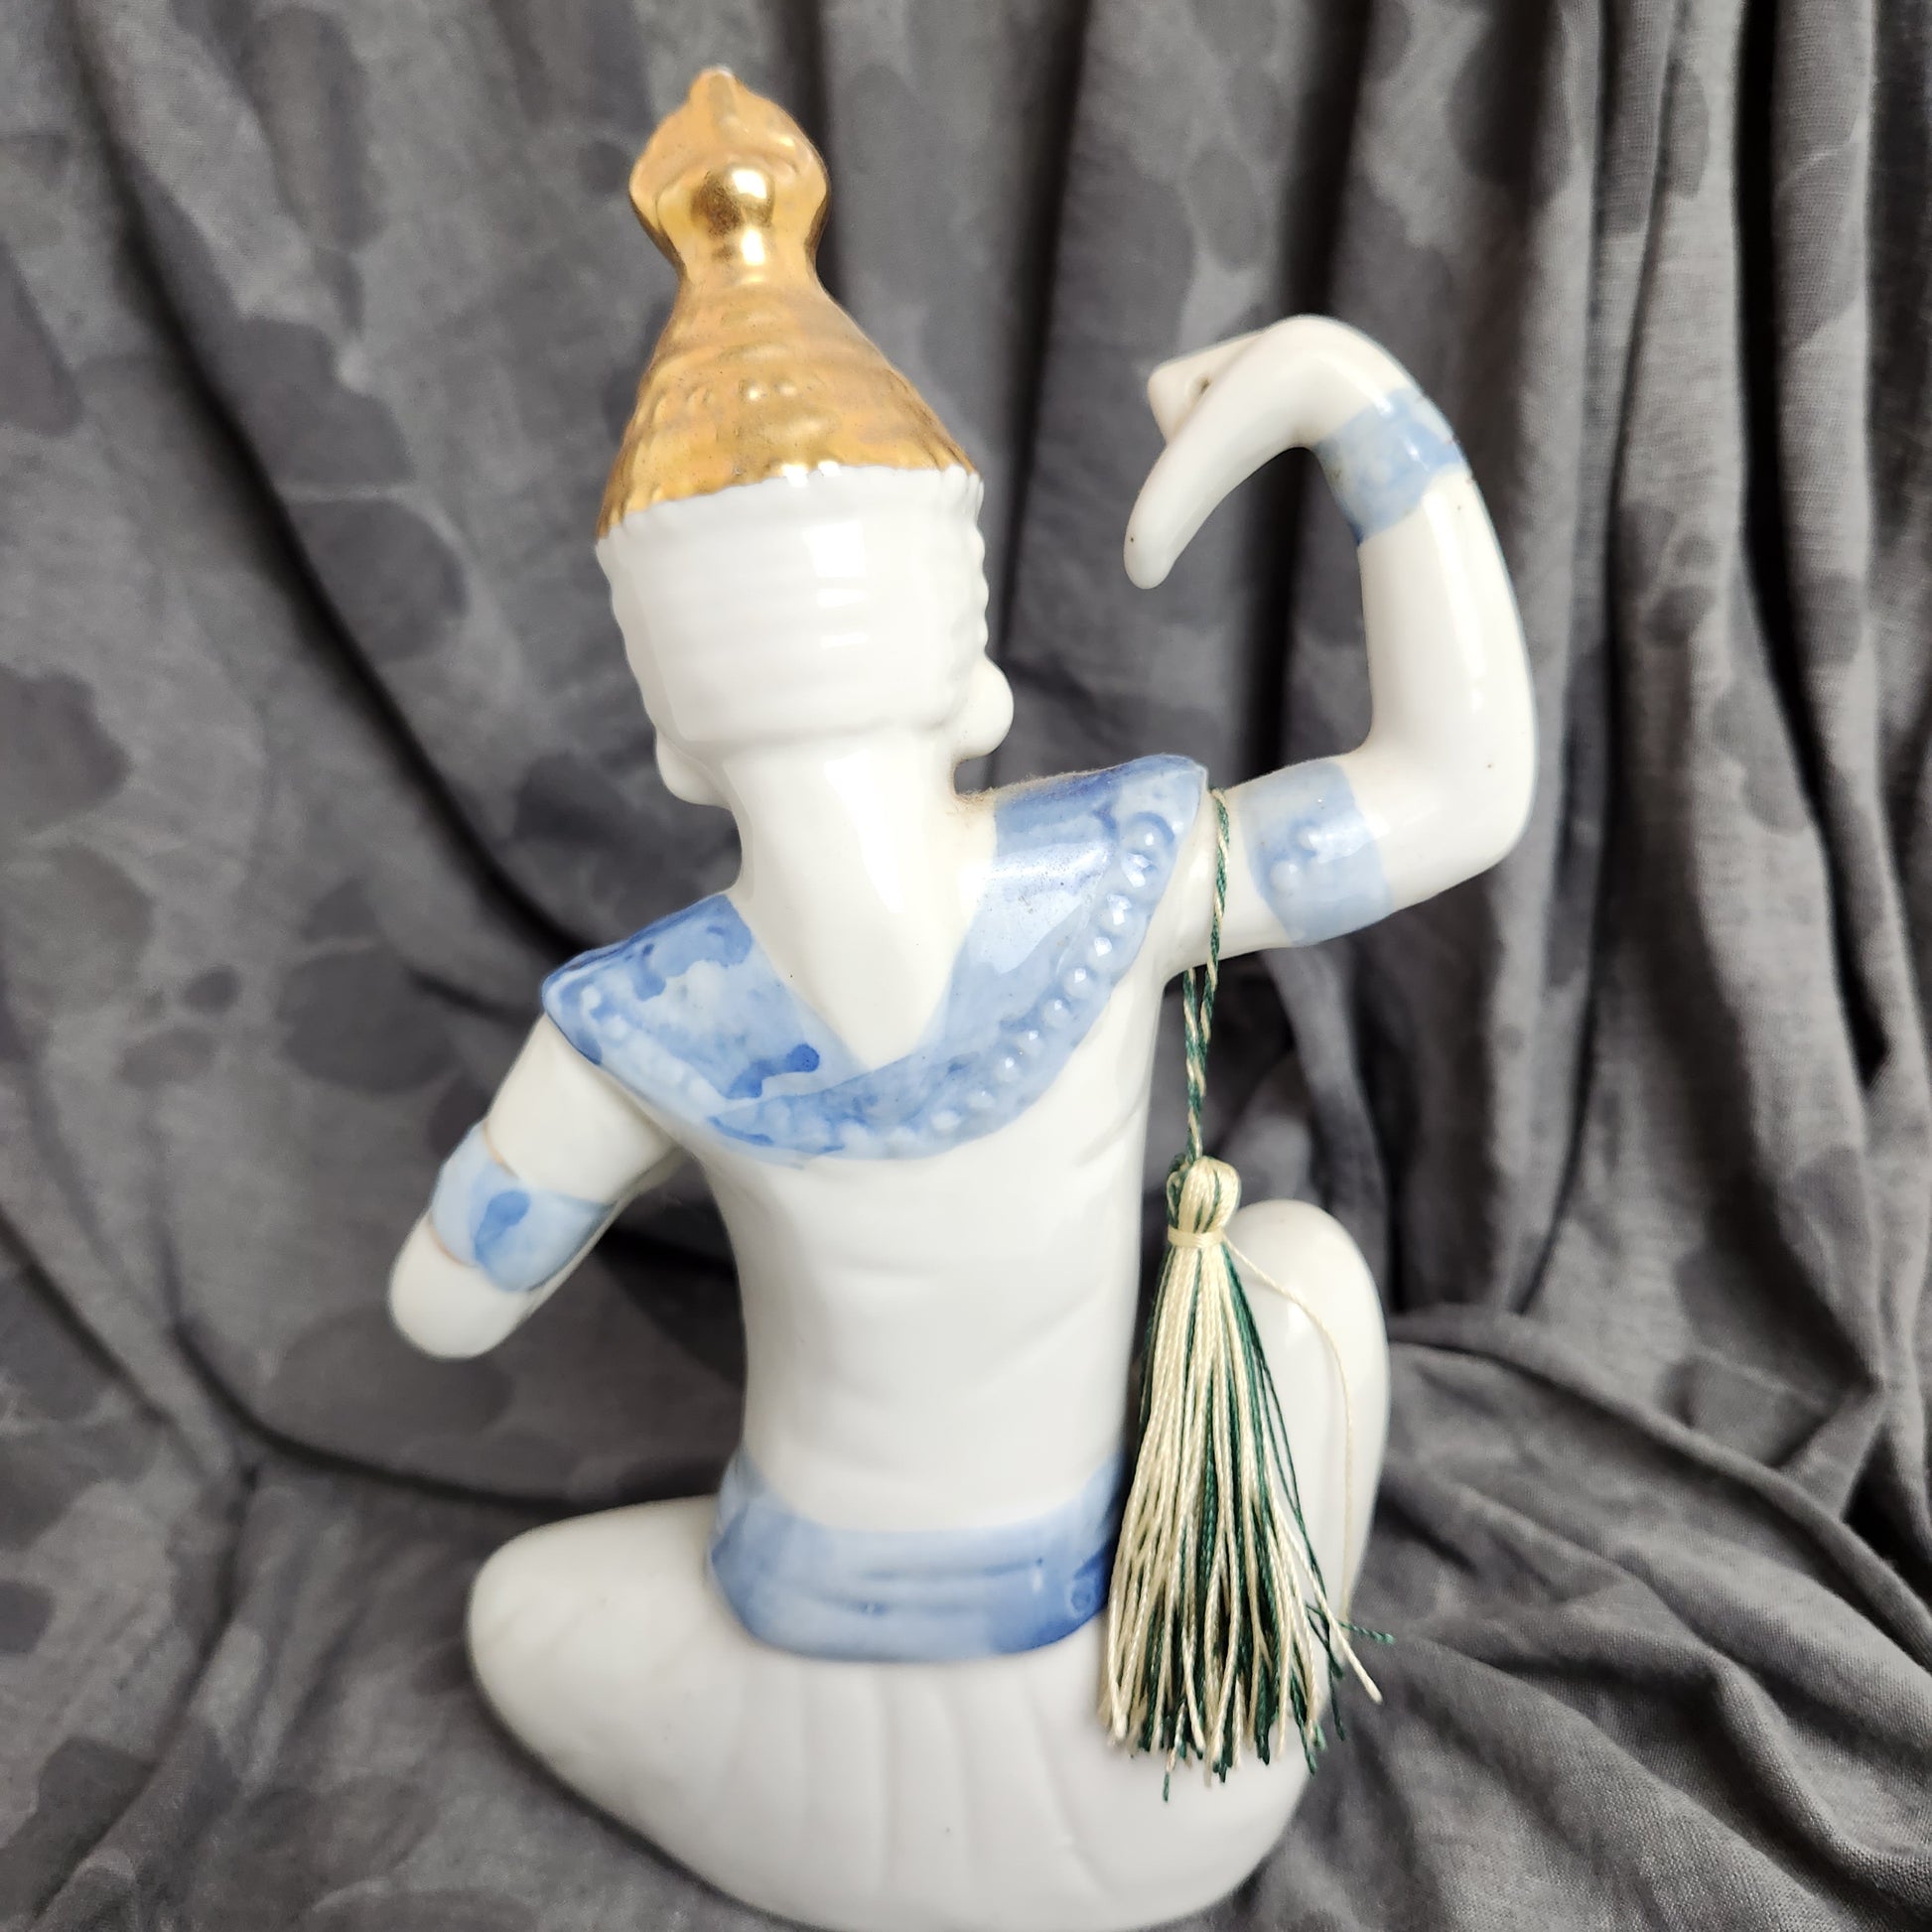 Porcelain Thai Seated Figurine